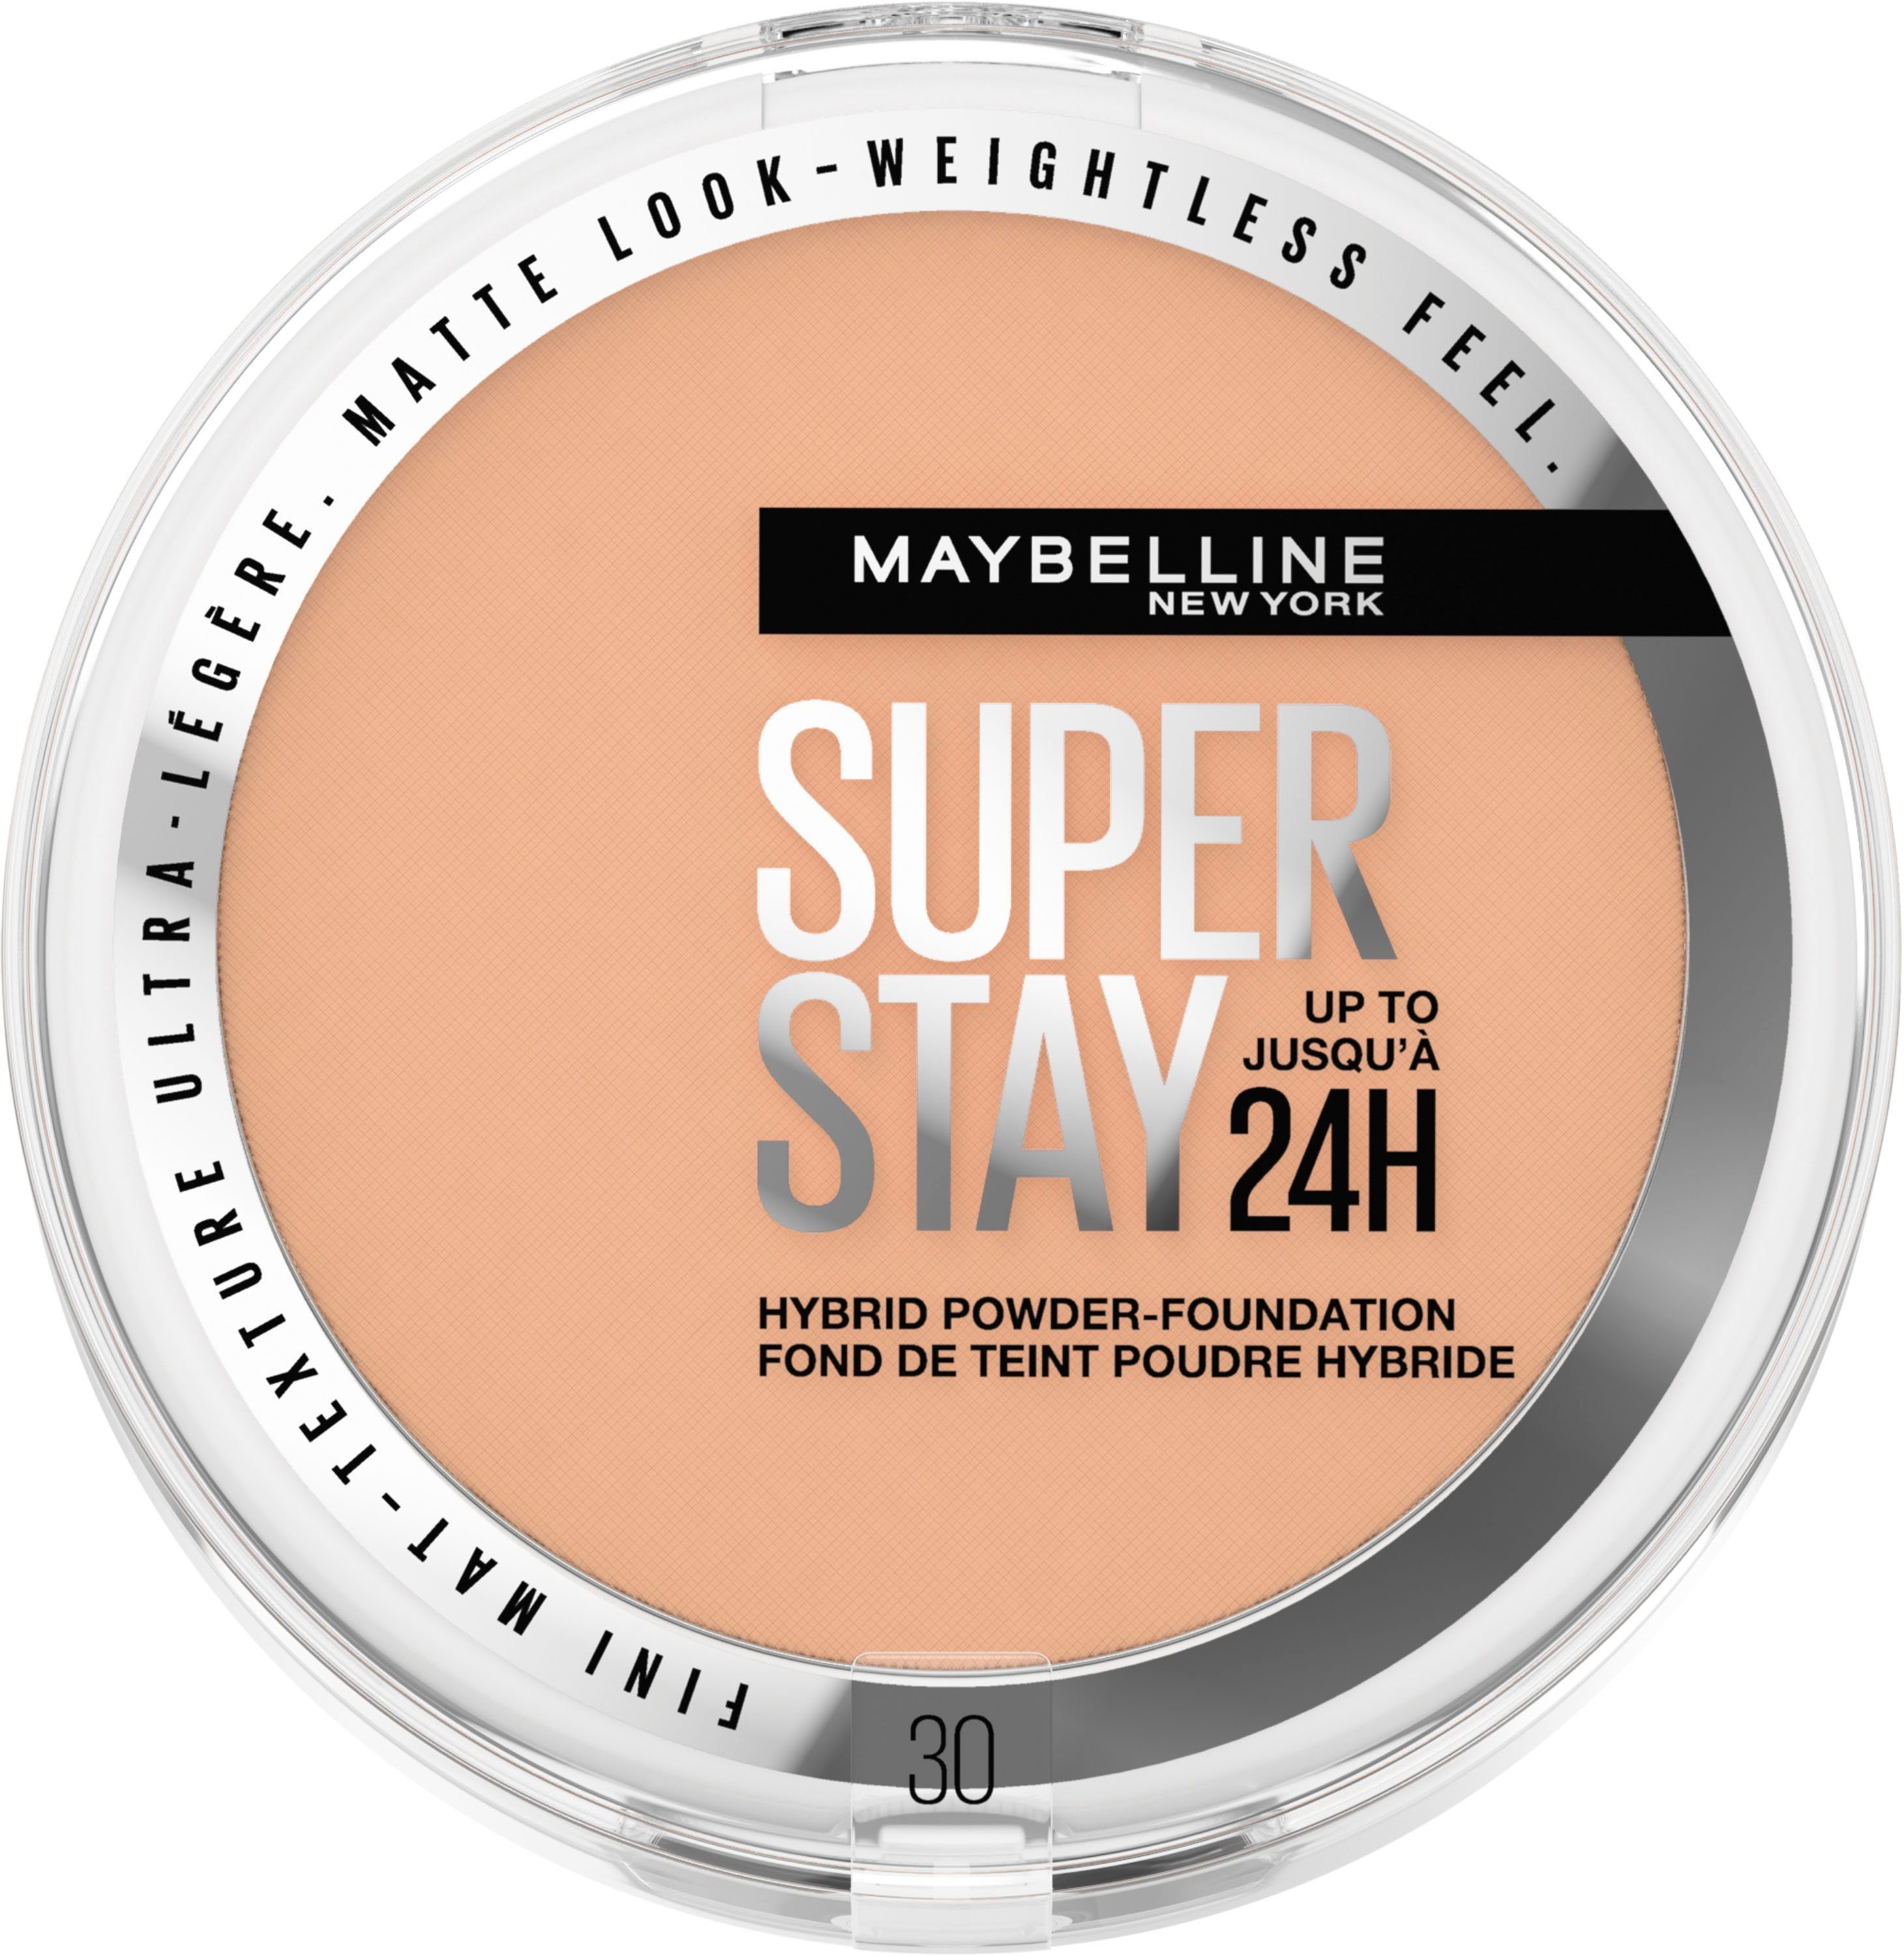 MAYBELLINE NEW YORK Foundation Maybelline New Puder Stay Make-Up Hybrides Super York